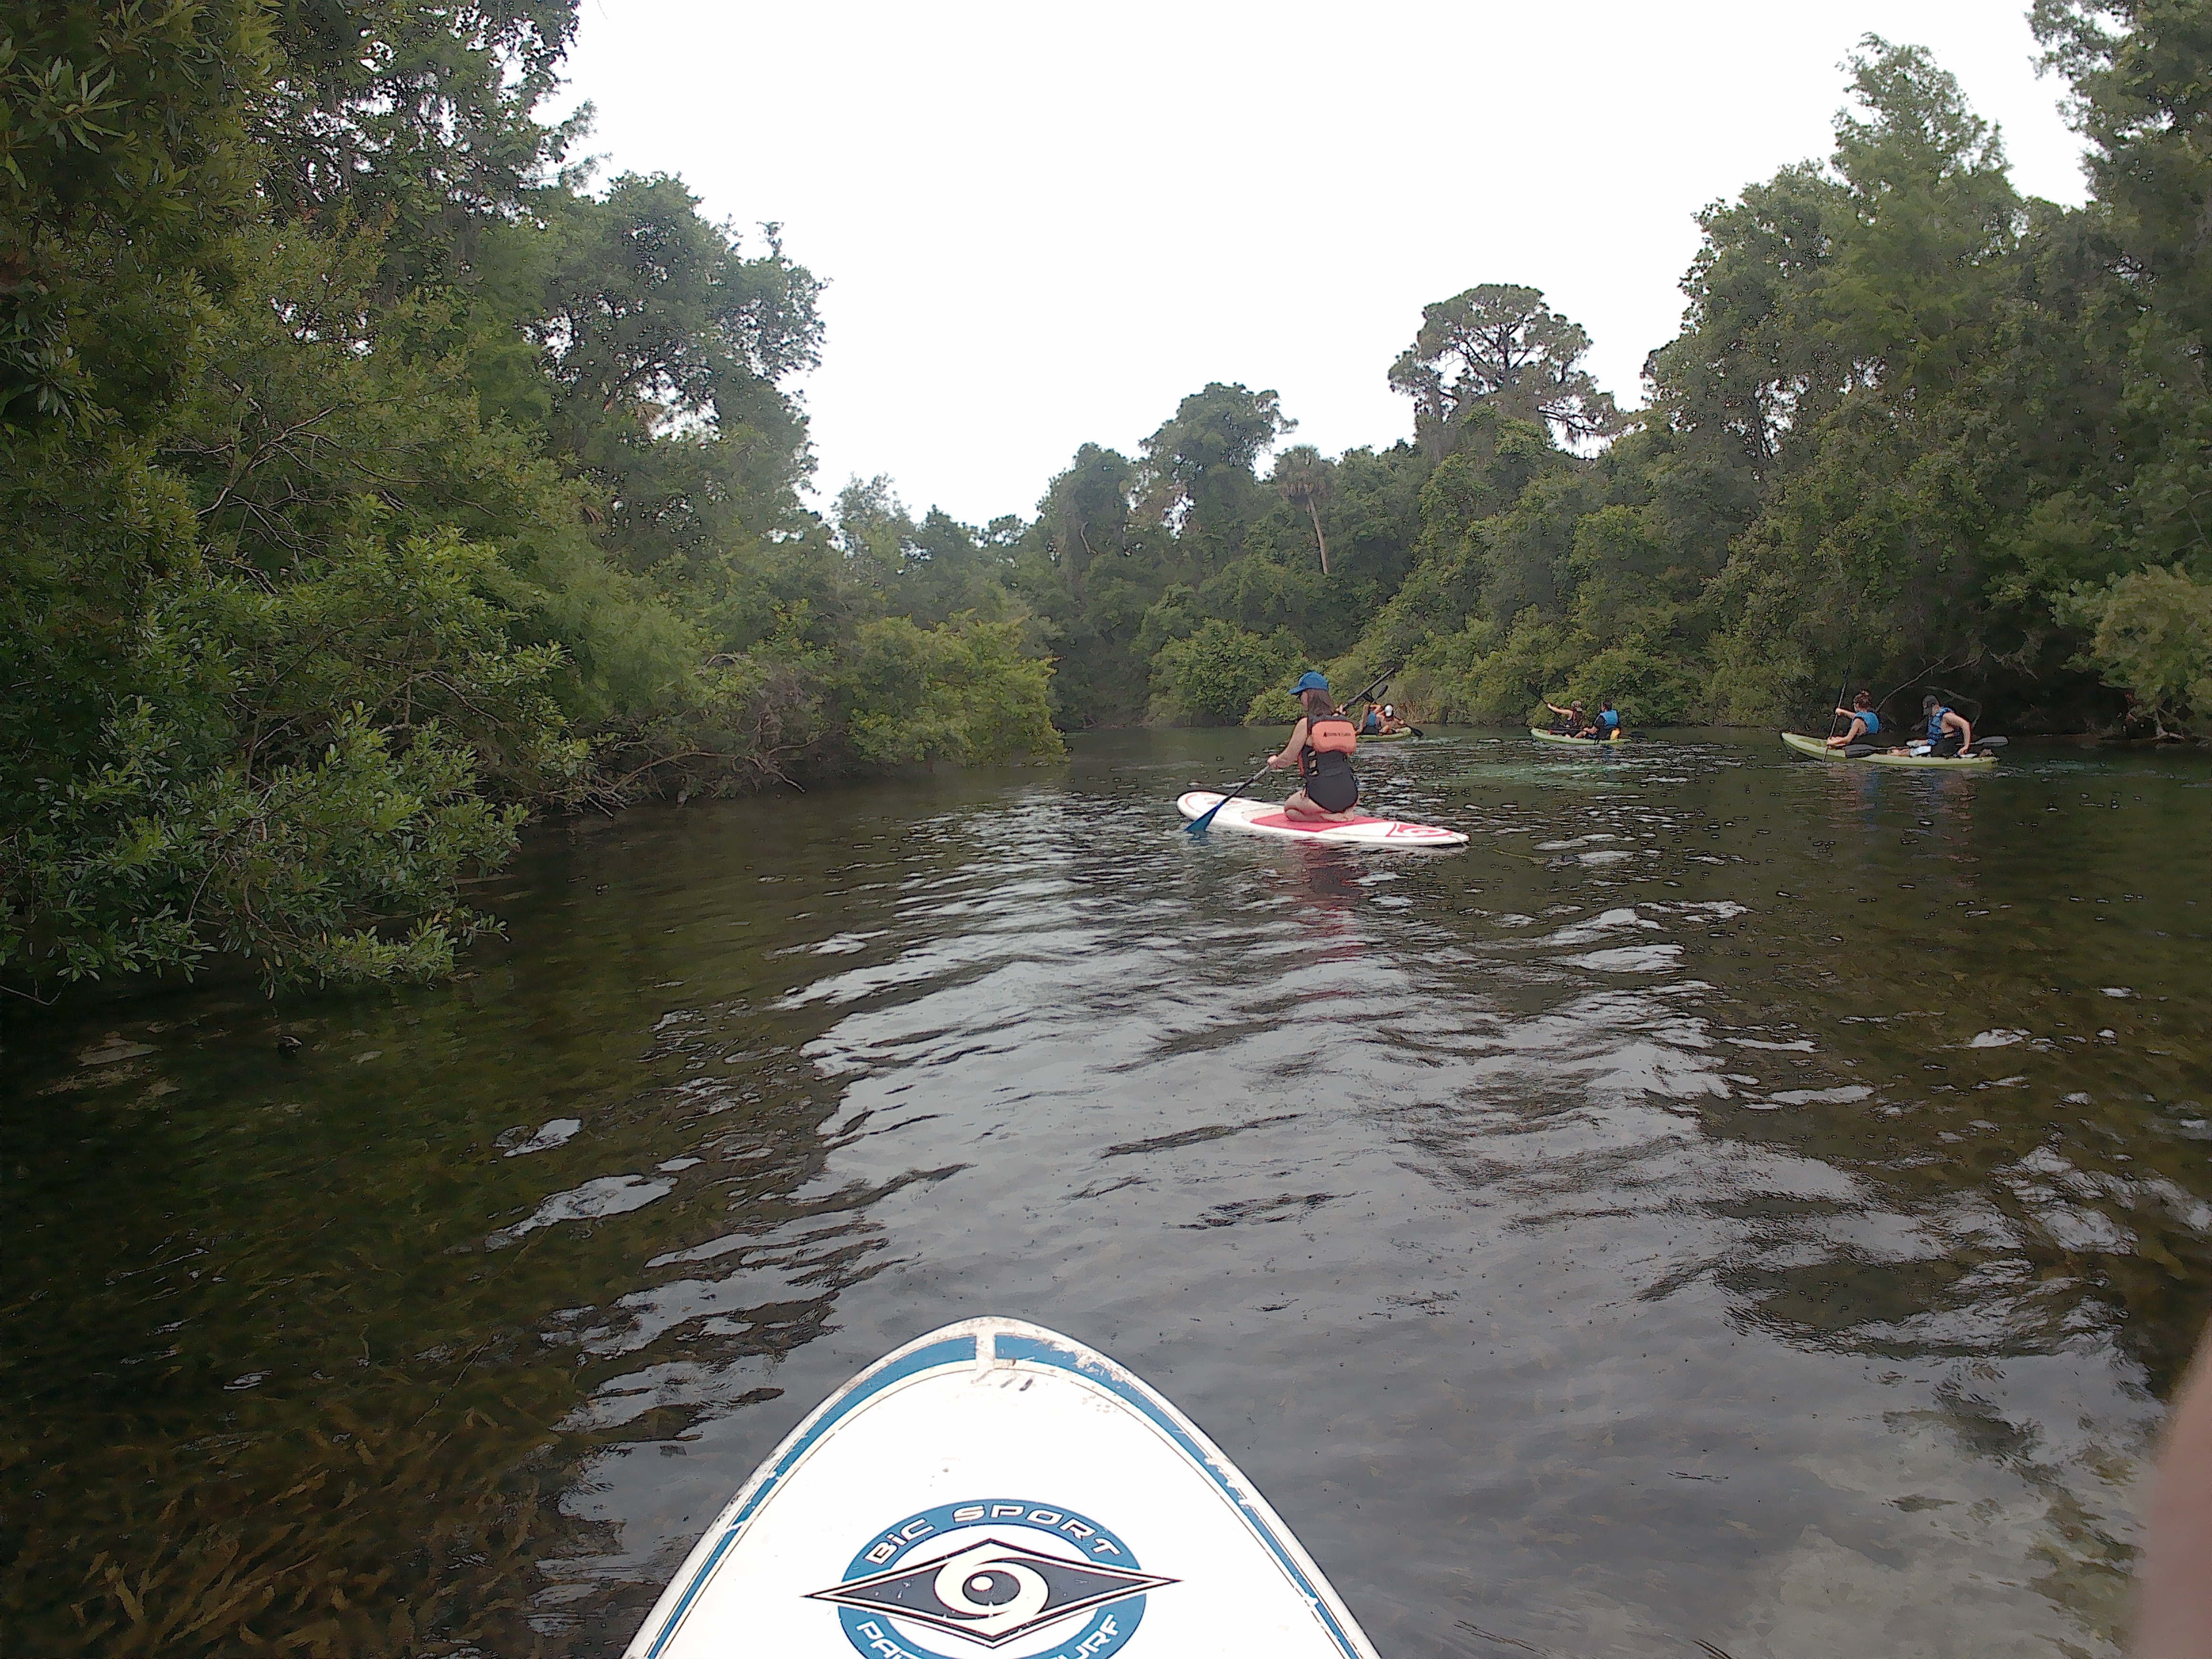 Alyssa paddles on the Weeki Wachee River